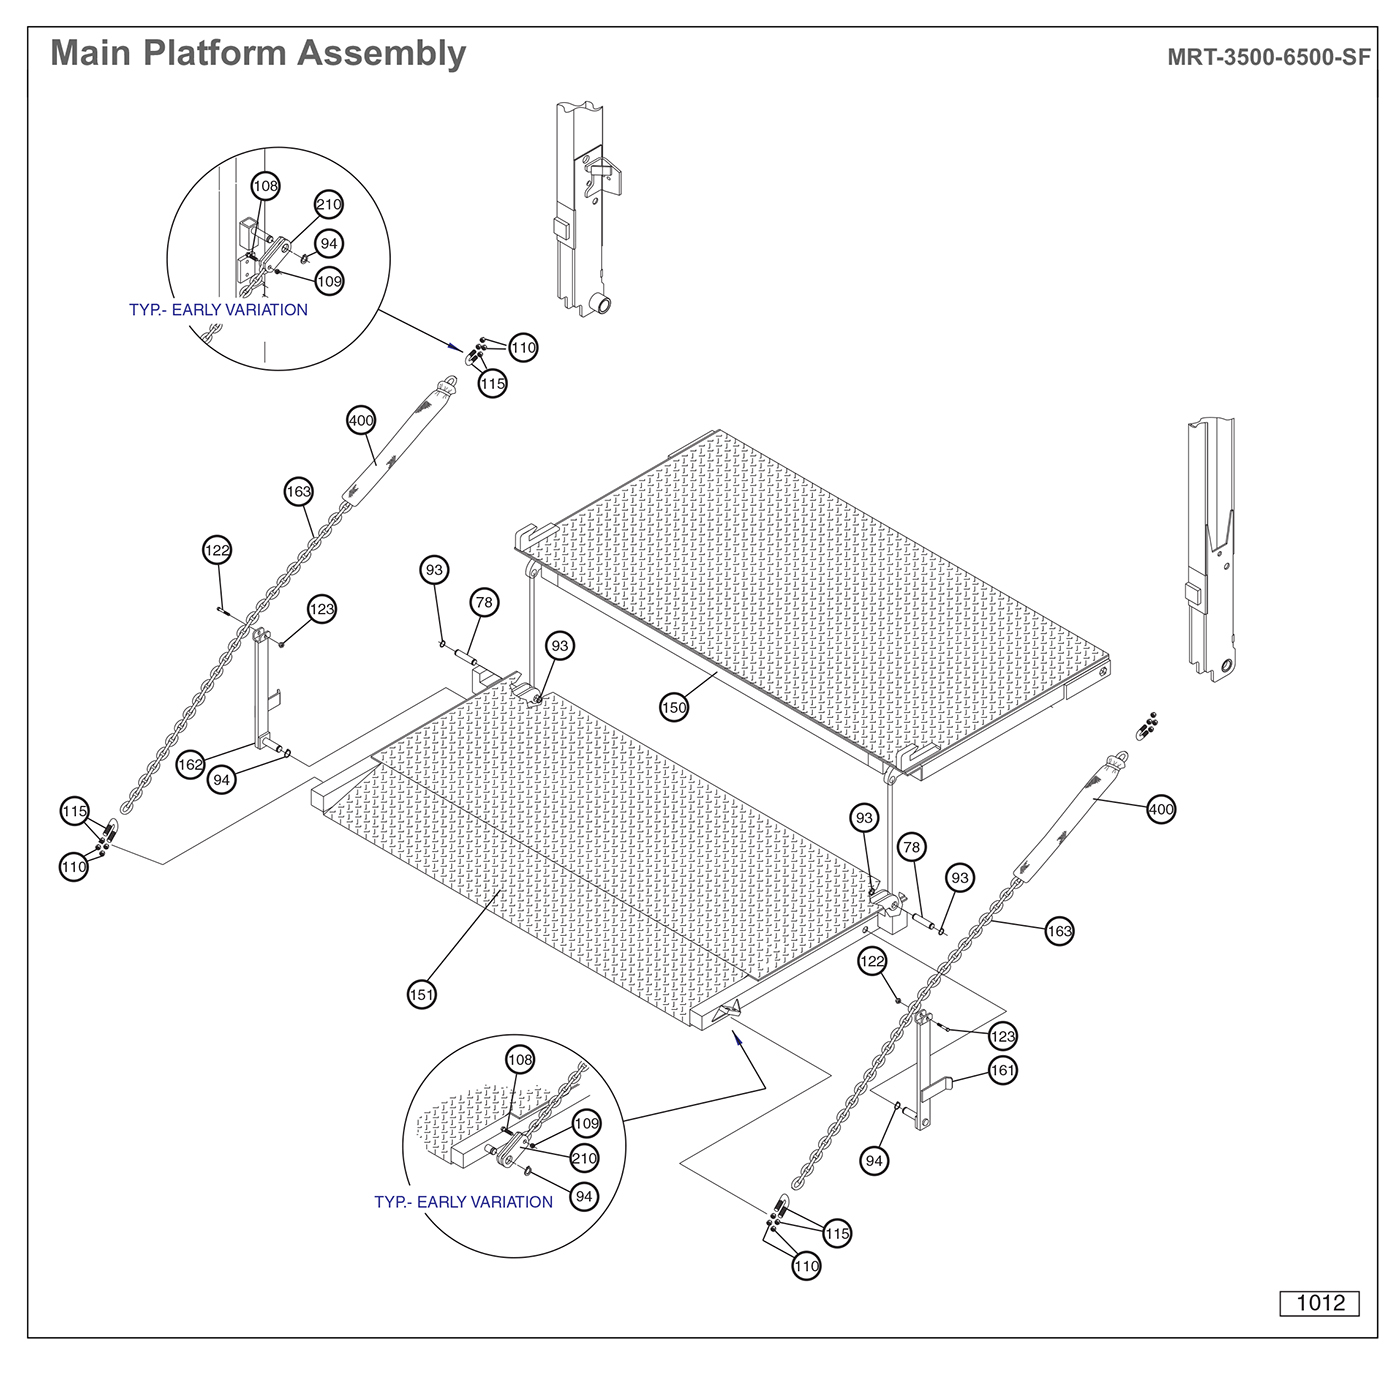 Anthony MRT-3500-6500-SF Main Platform Assembly Diagram